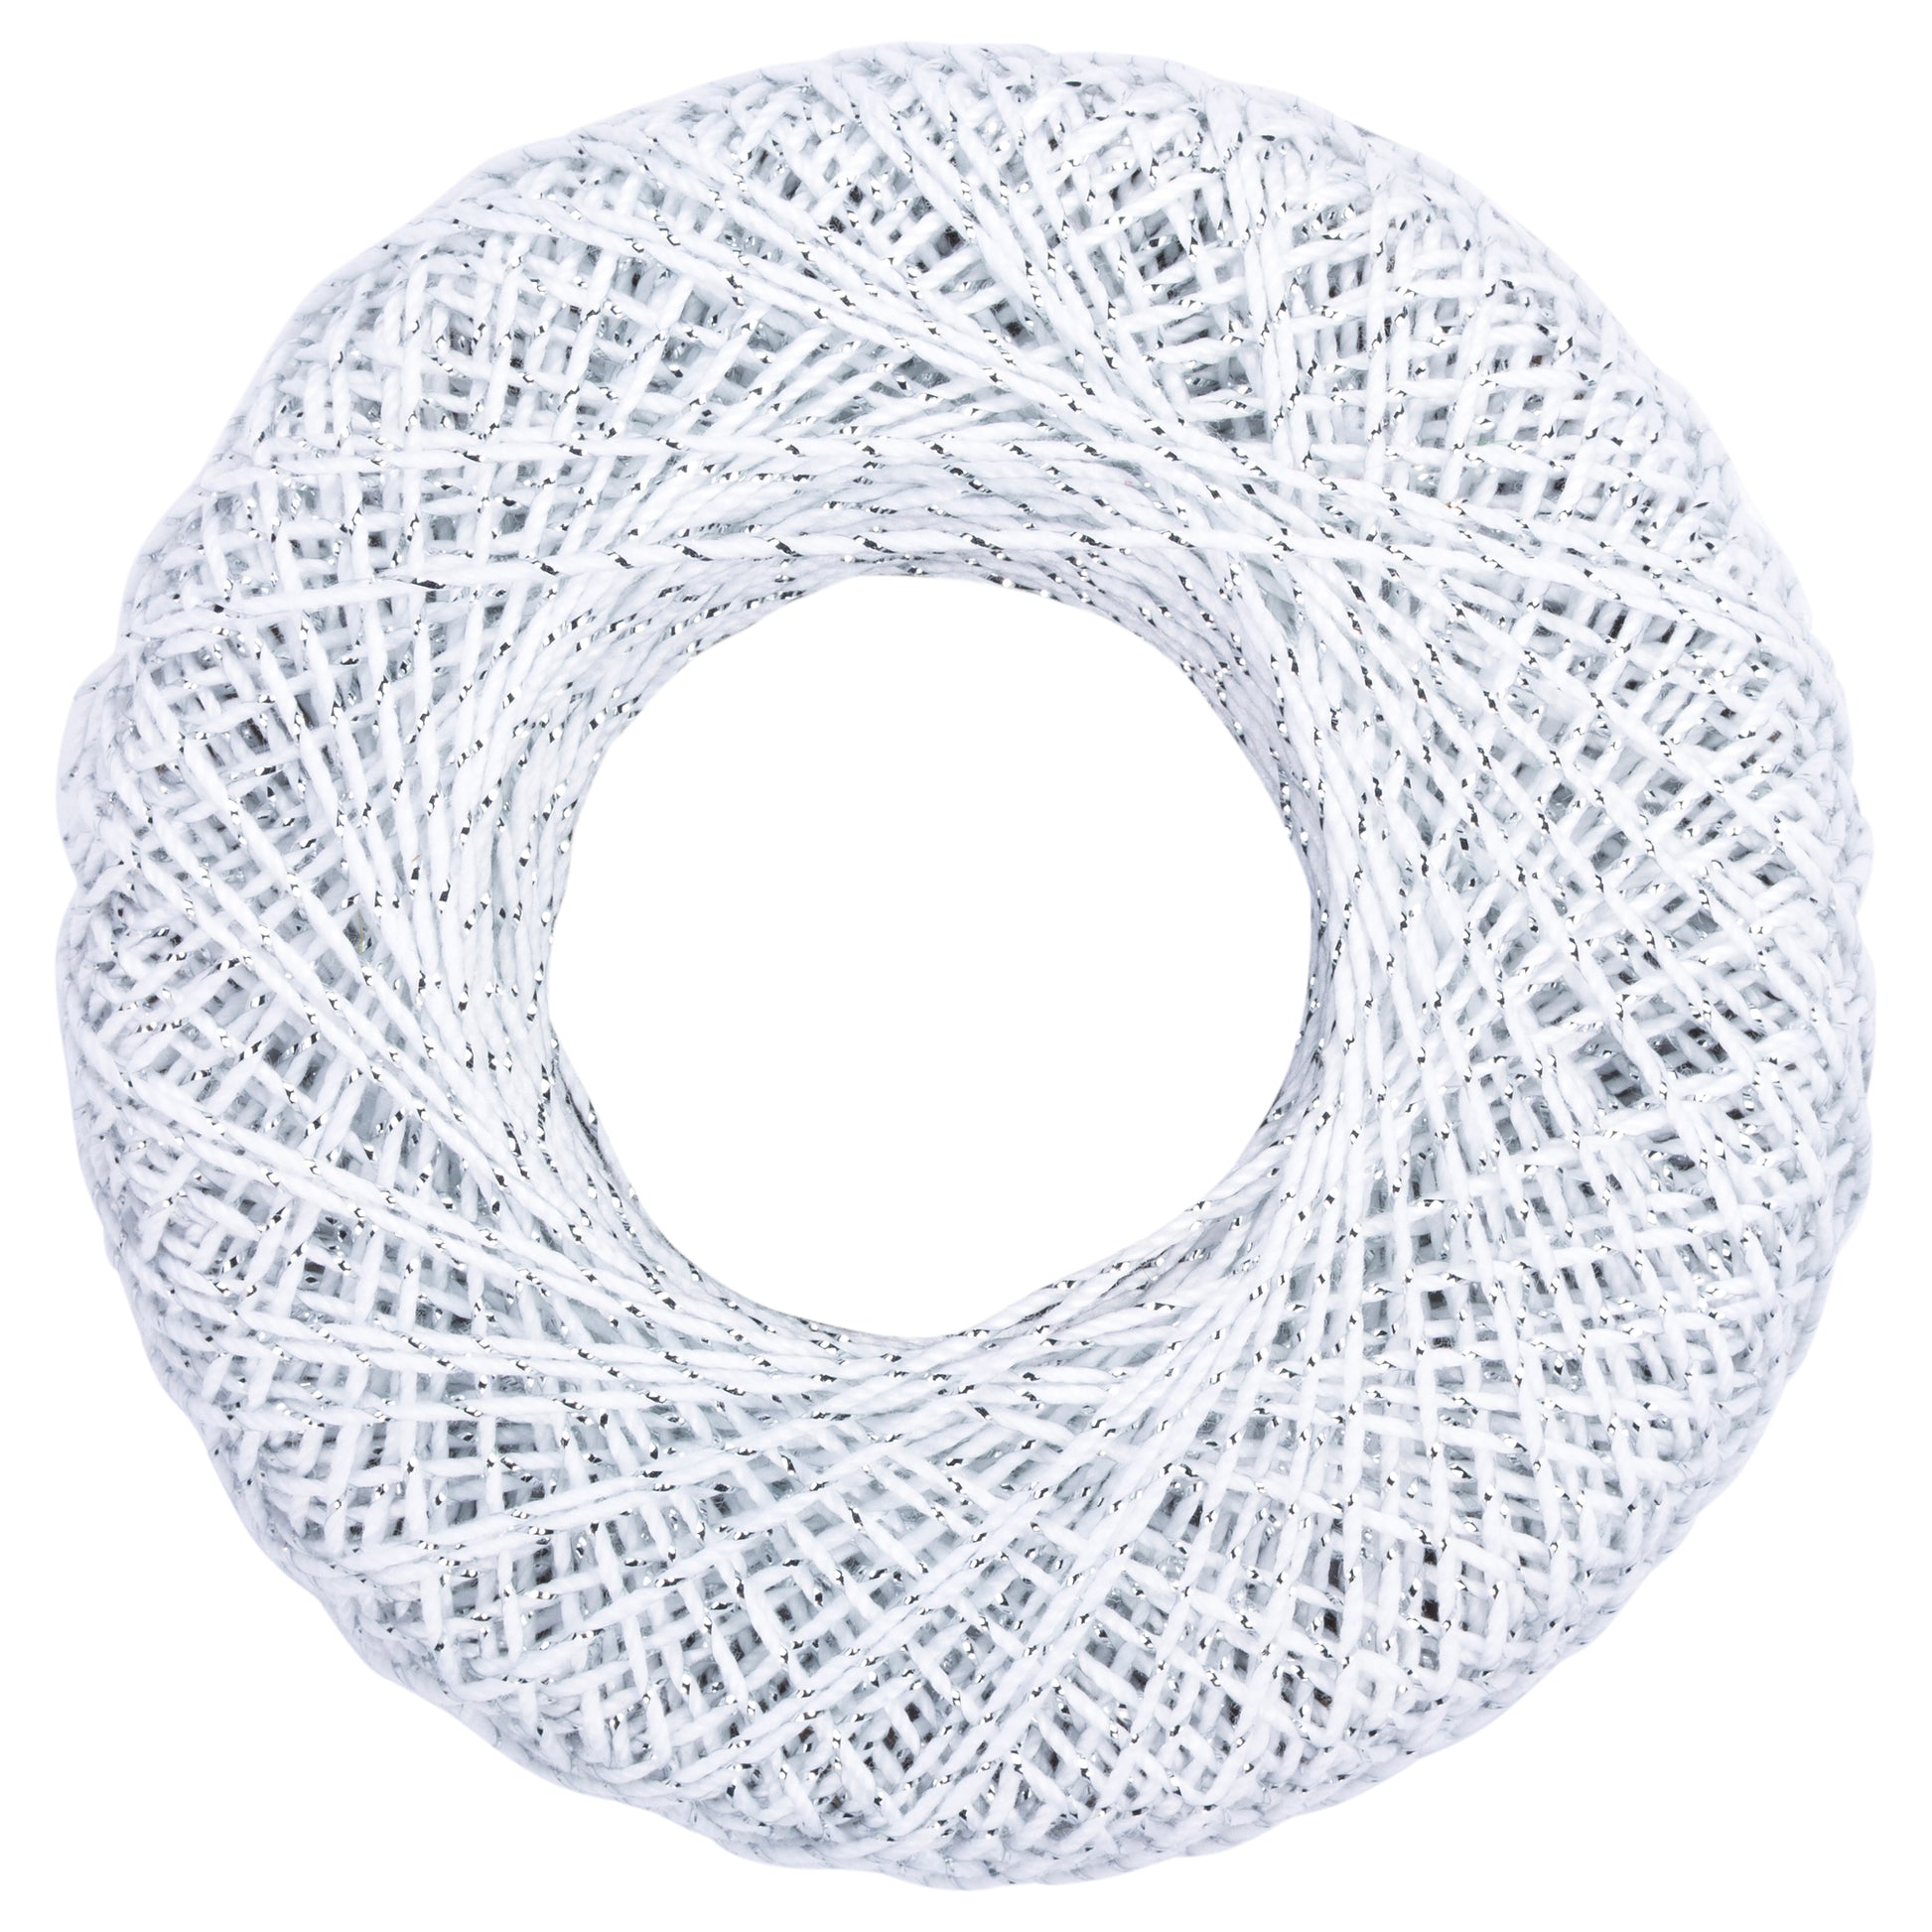 Aunt Lydia's Metallic Crochet Thread Size 10-Natural & Gold, 1 count -  Harris Teeter